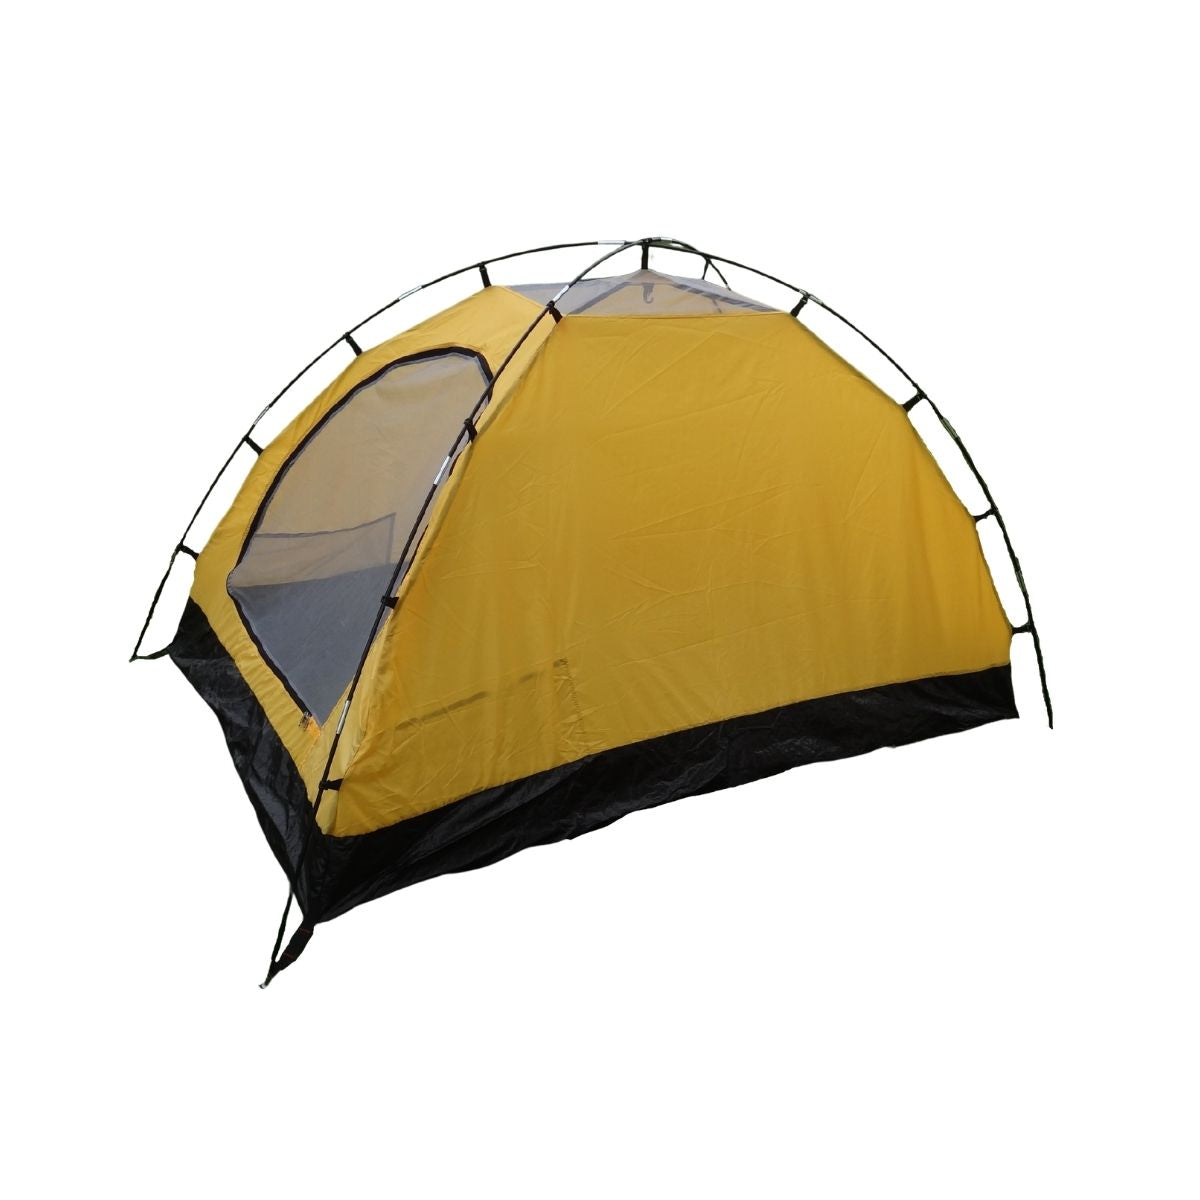 QuipCo Gecko 2-Person Camping Tent 4